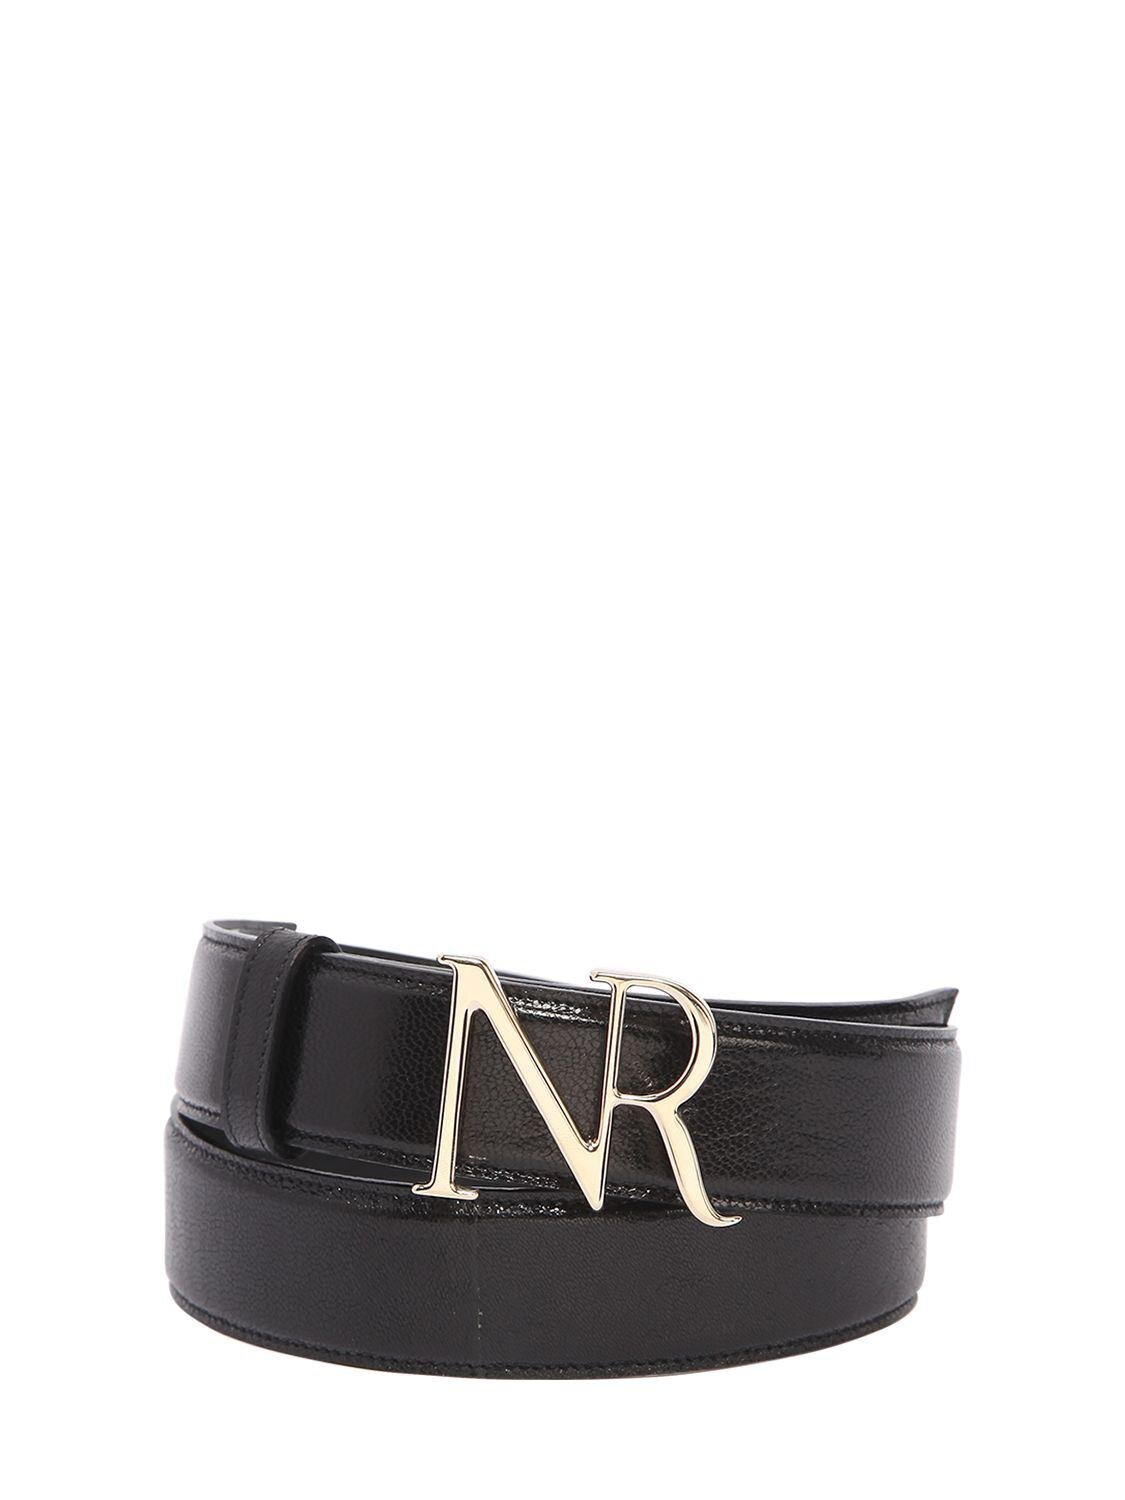 Nina Ricci NR Logo Belt in Black.jpg